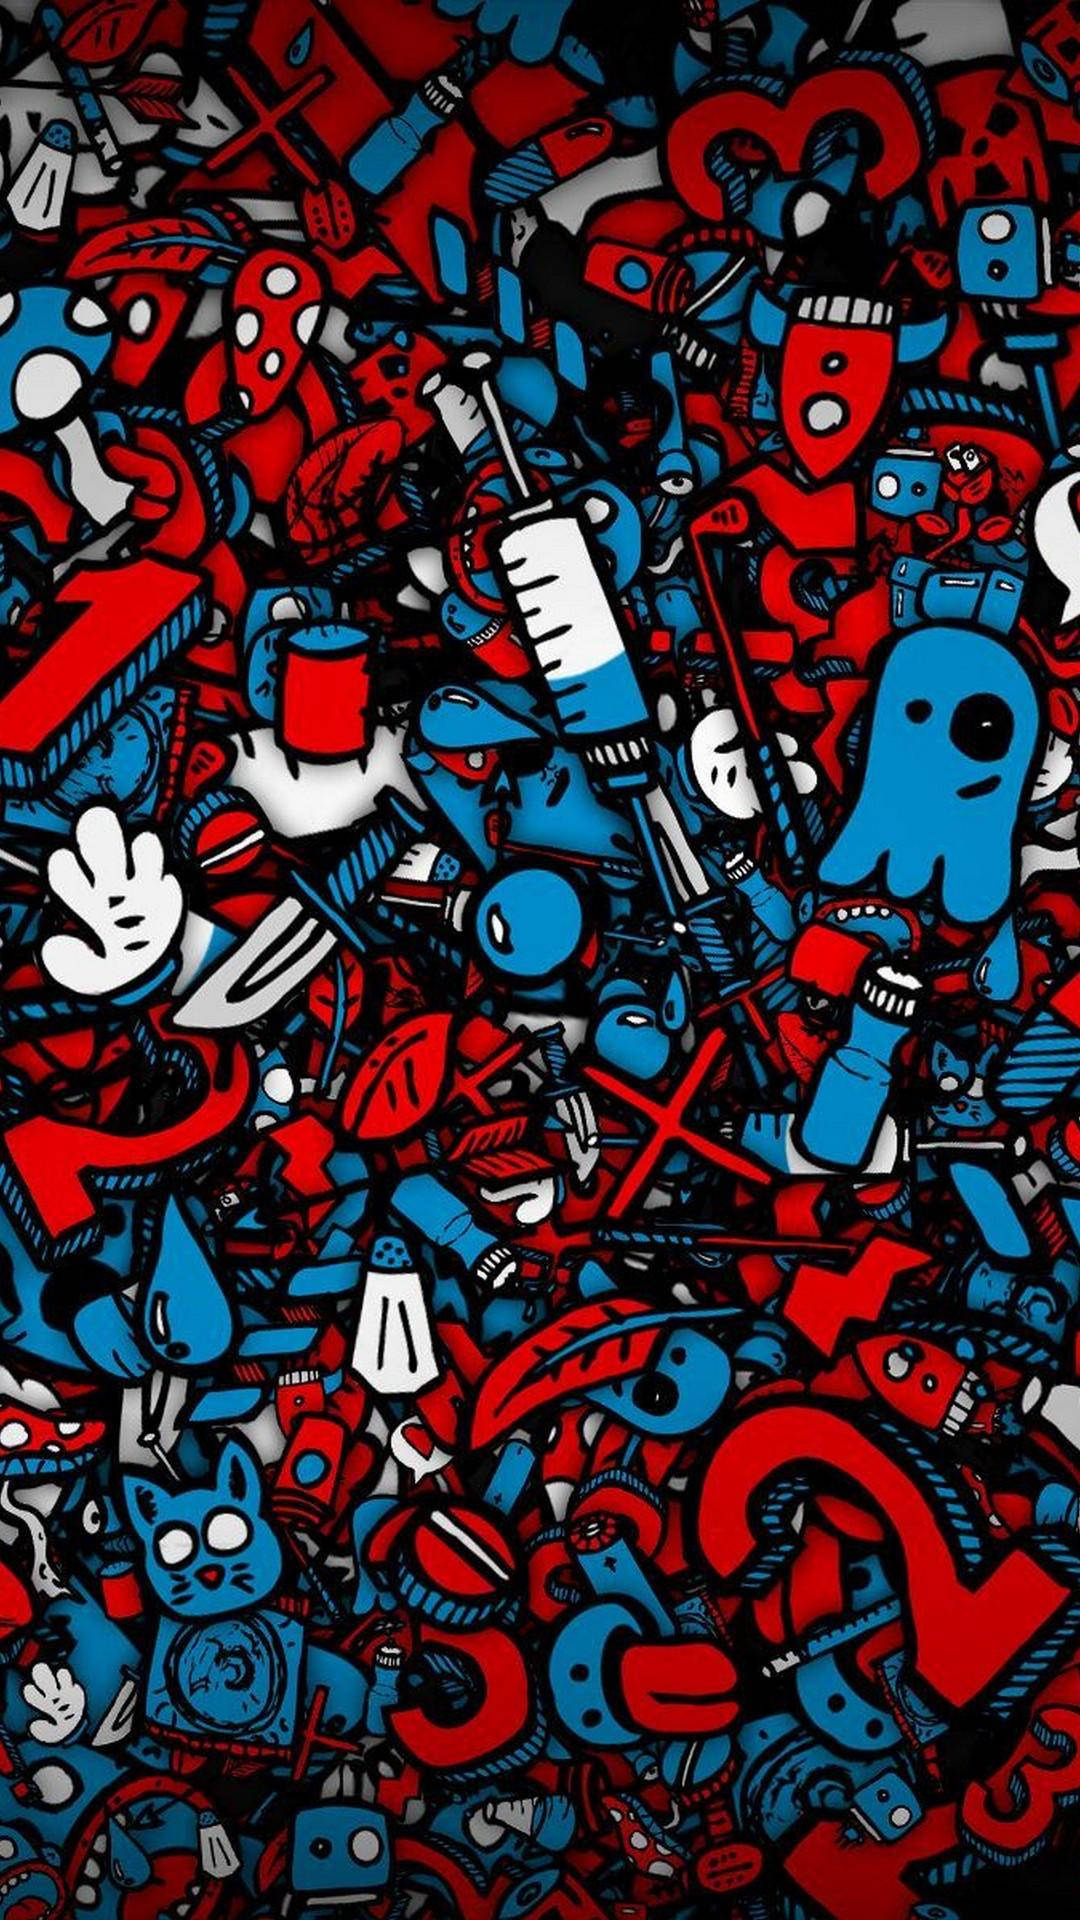 Roteund Blaue Abstrakte Wandgraffiti Iphone Hintergrund. Wallpaper